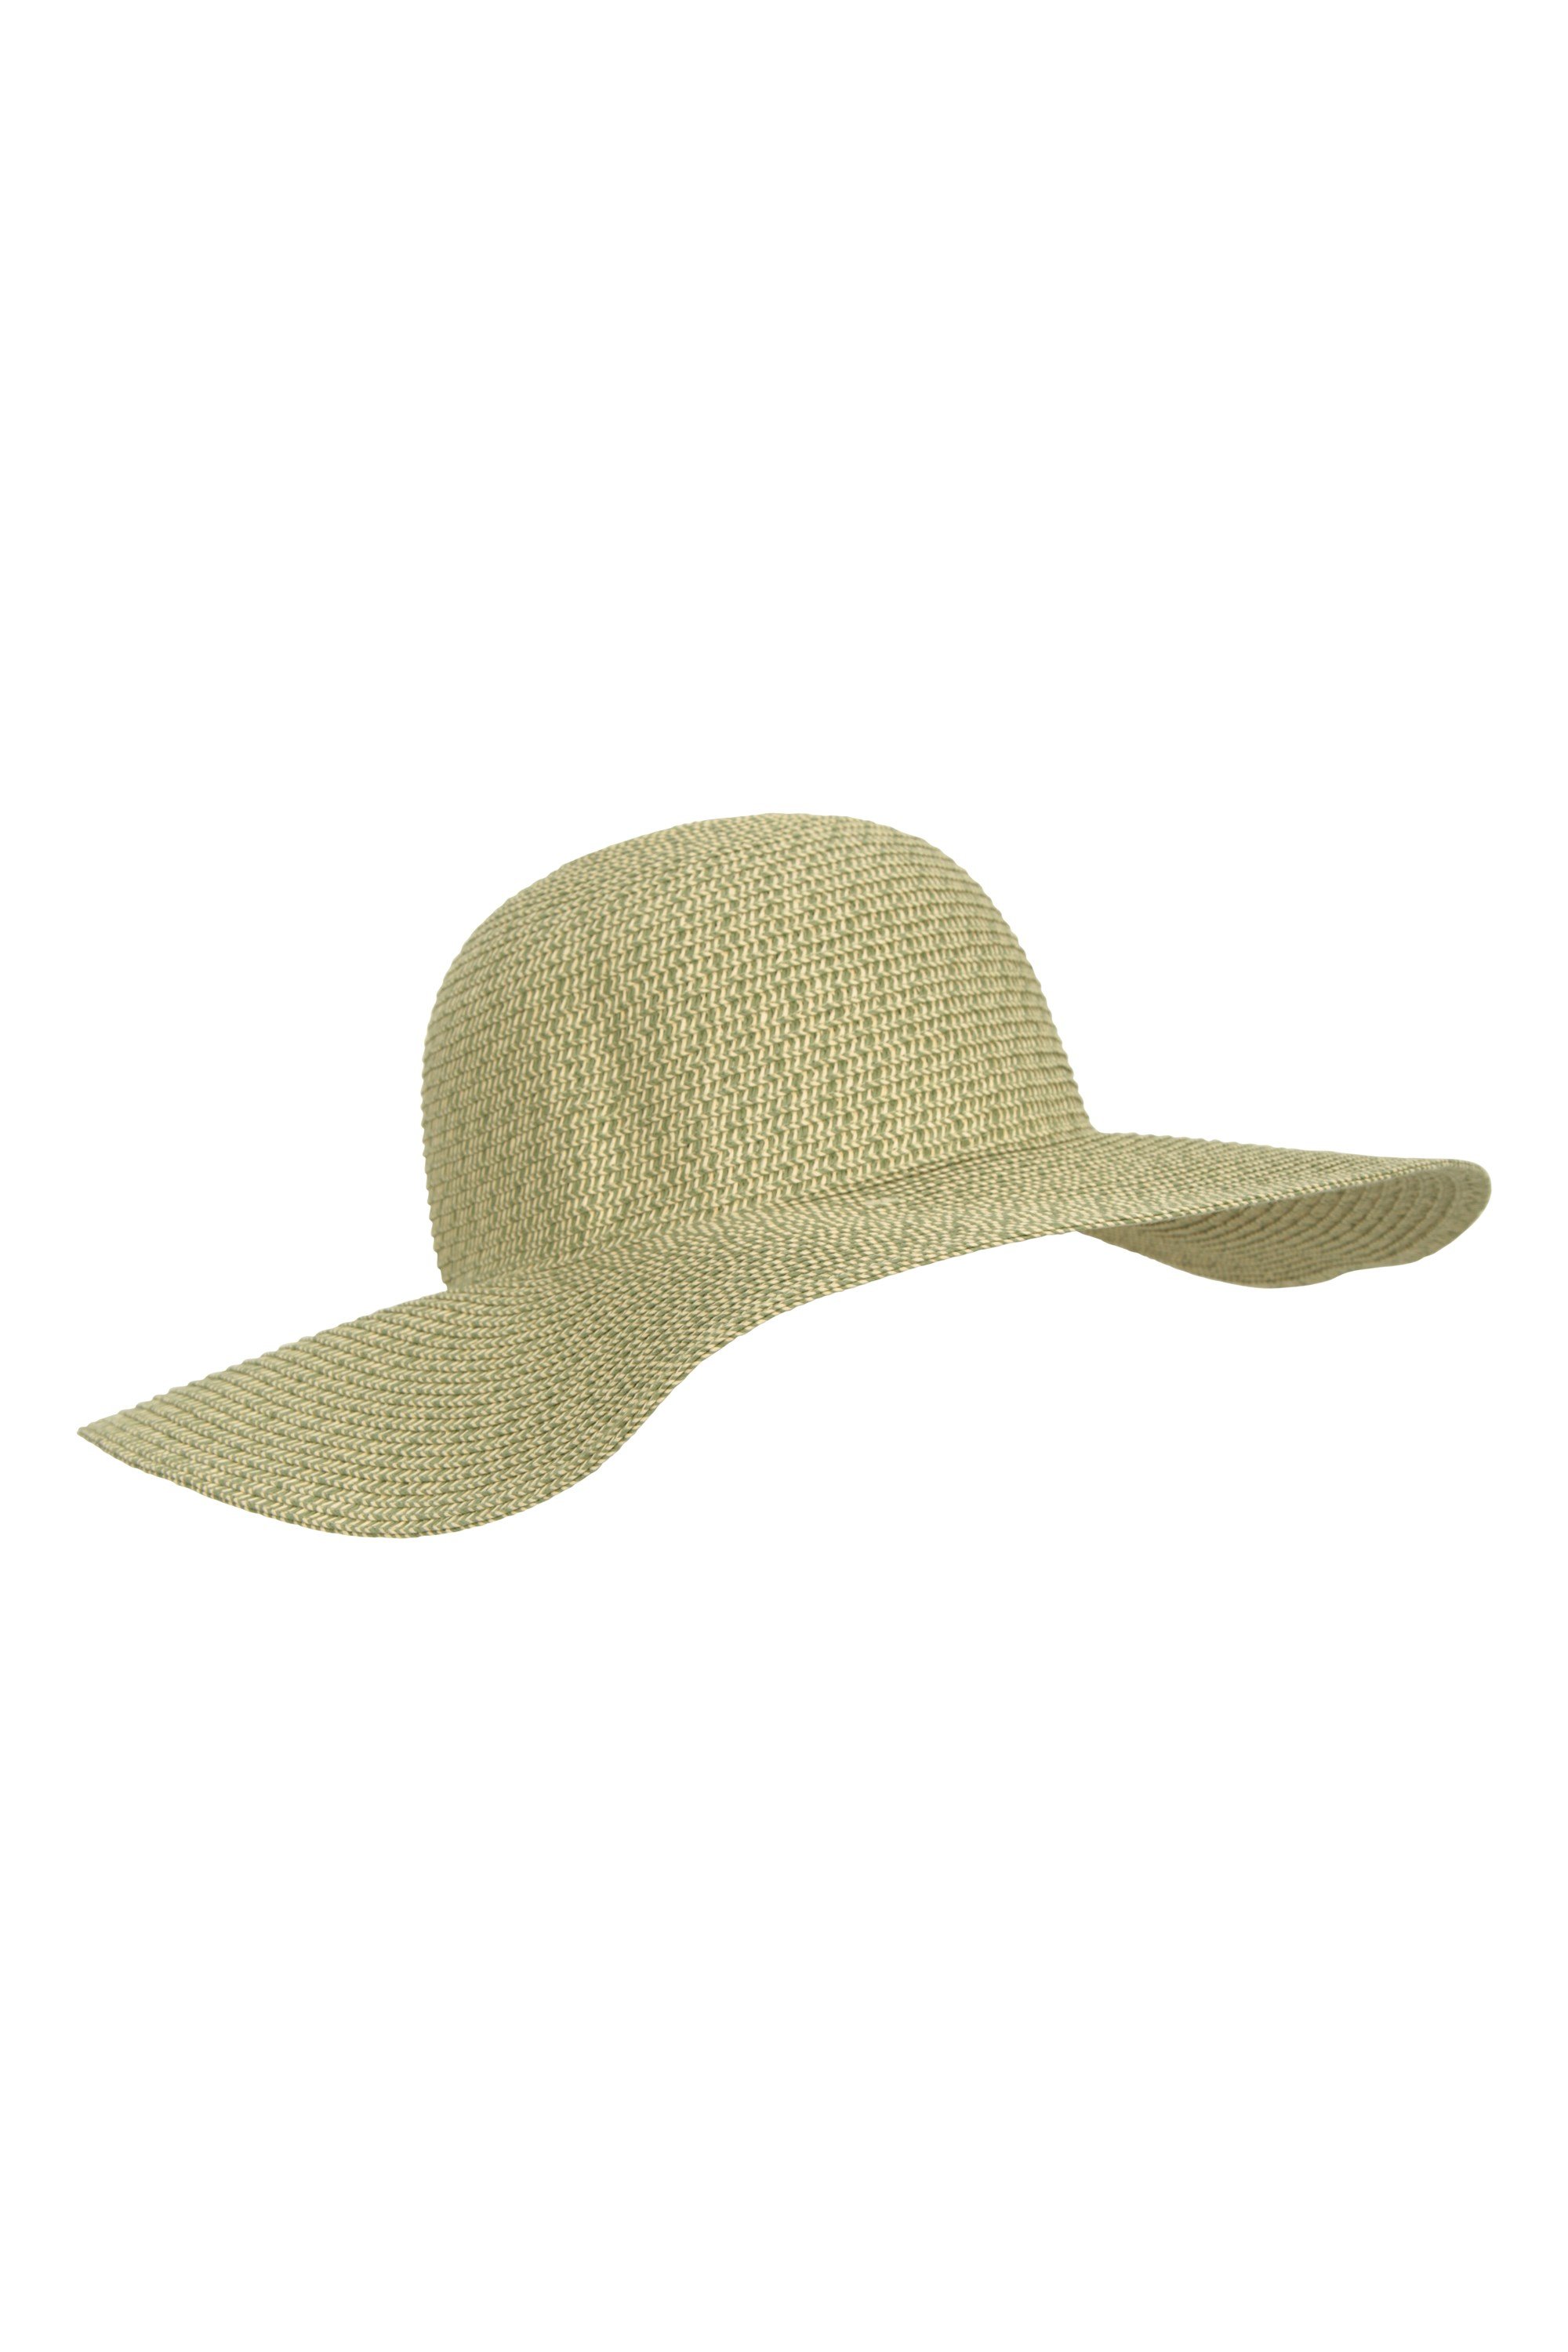 Lily Womens Floppy Sun Hat - Green